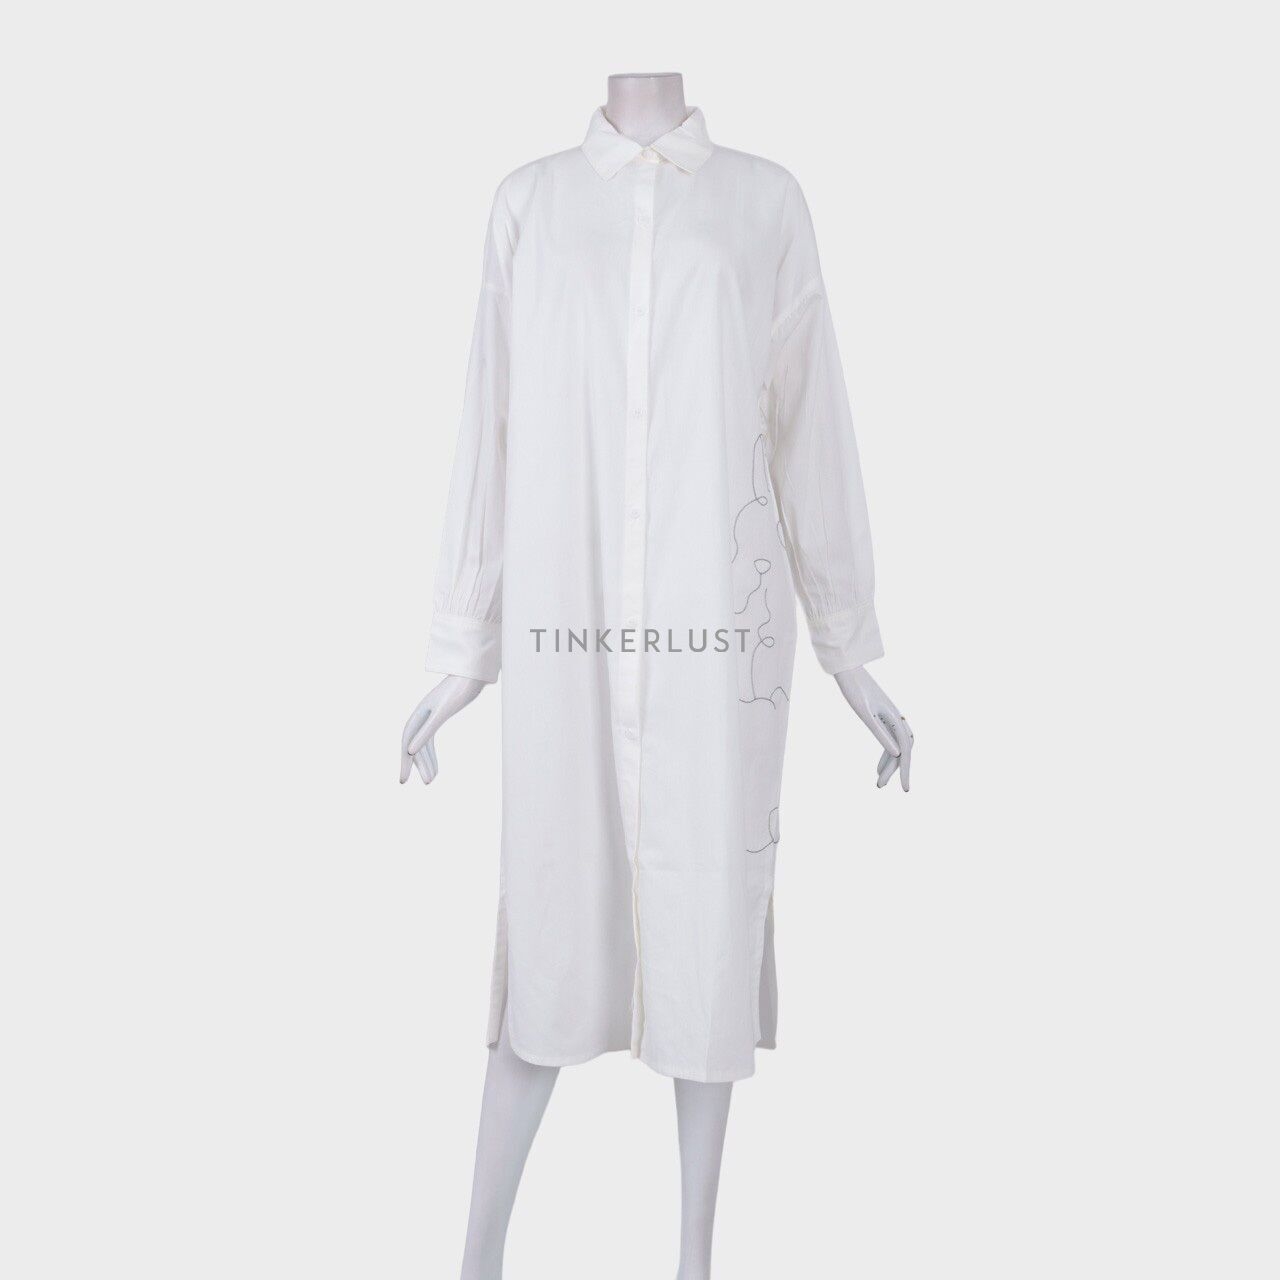 Eunoia Kyowa in White Shirt Midi Dress